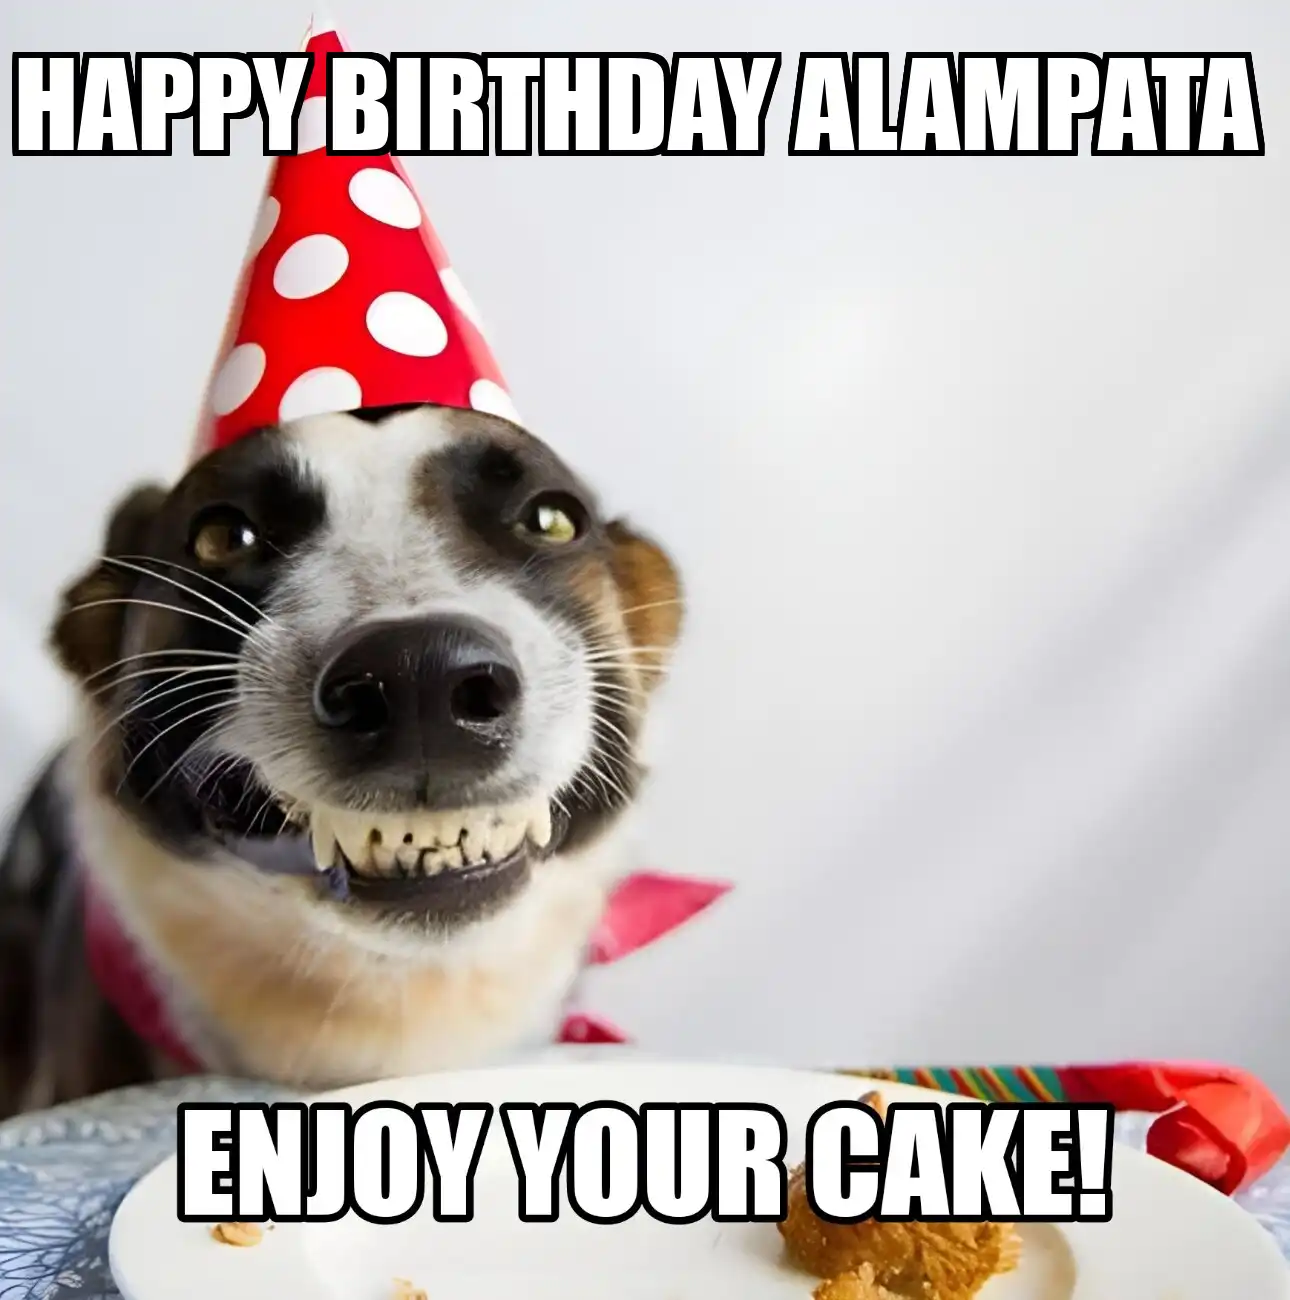 Happy Birthday Alampata Enjoy Your Cake Dog Meme